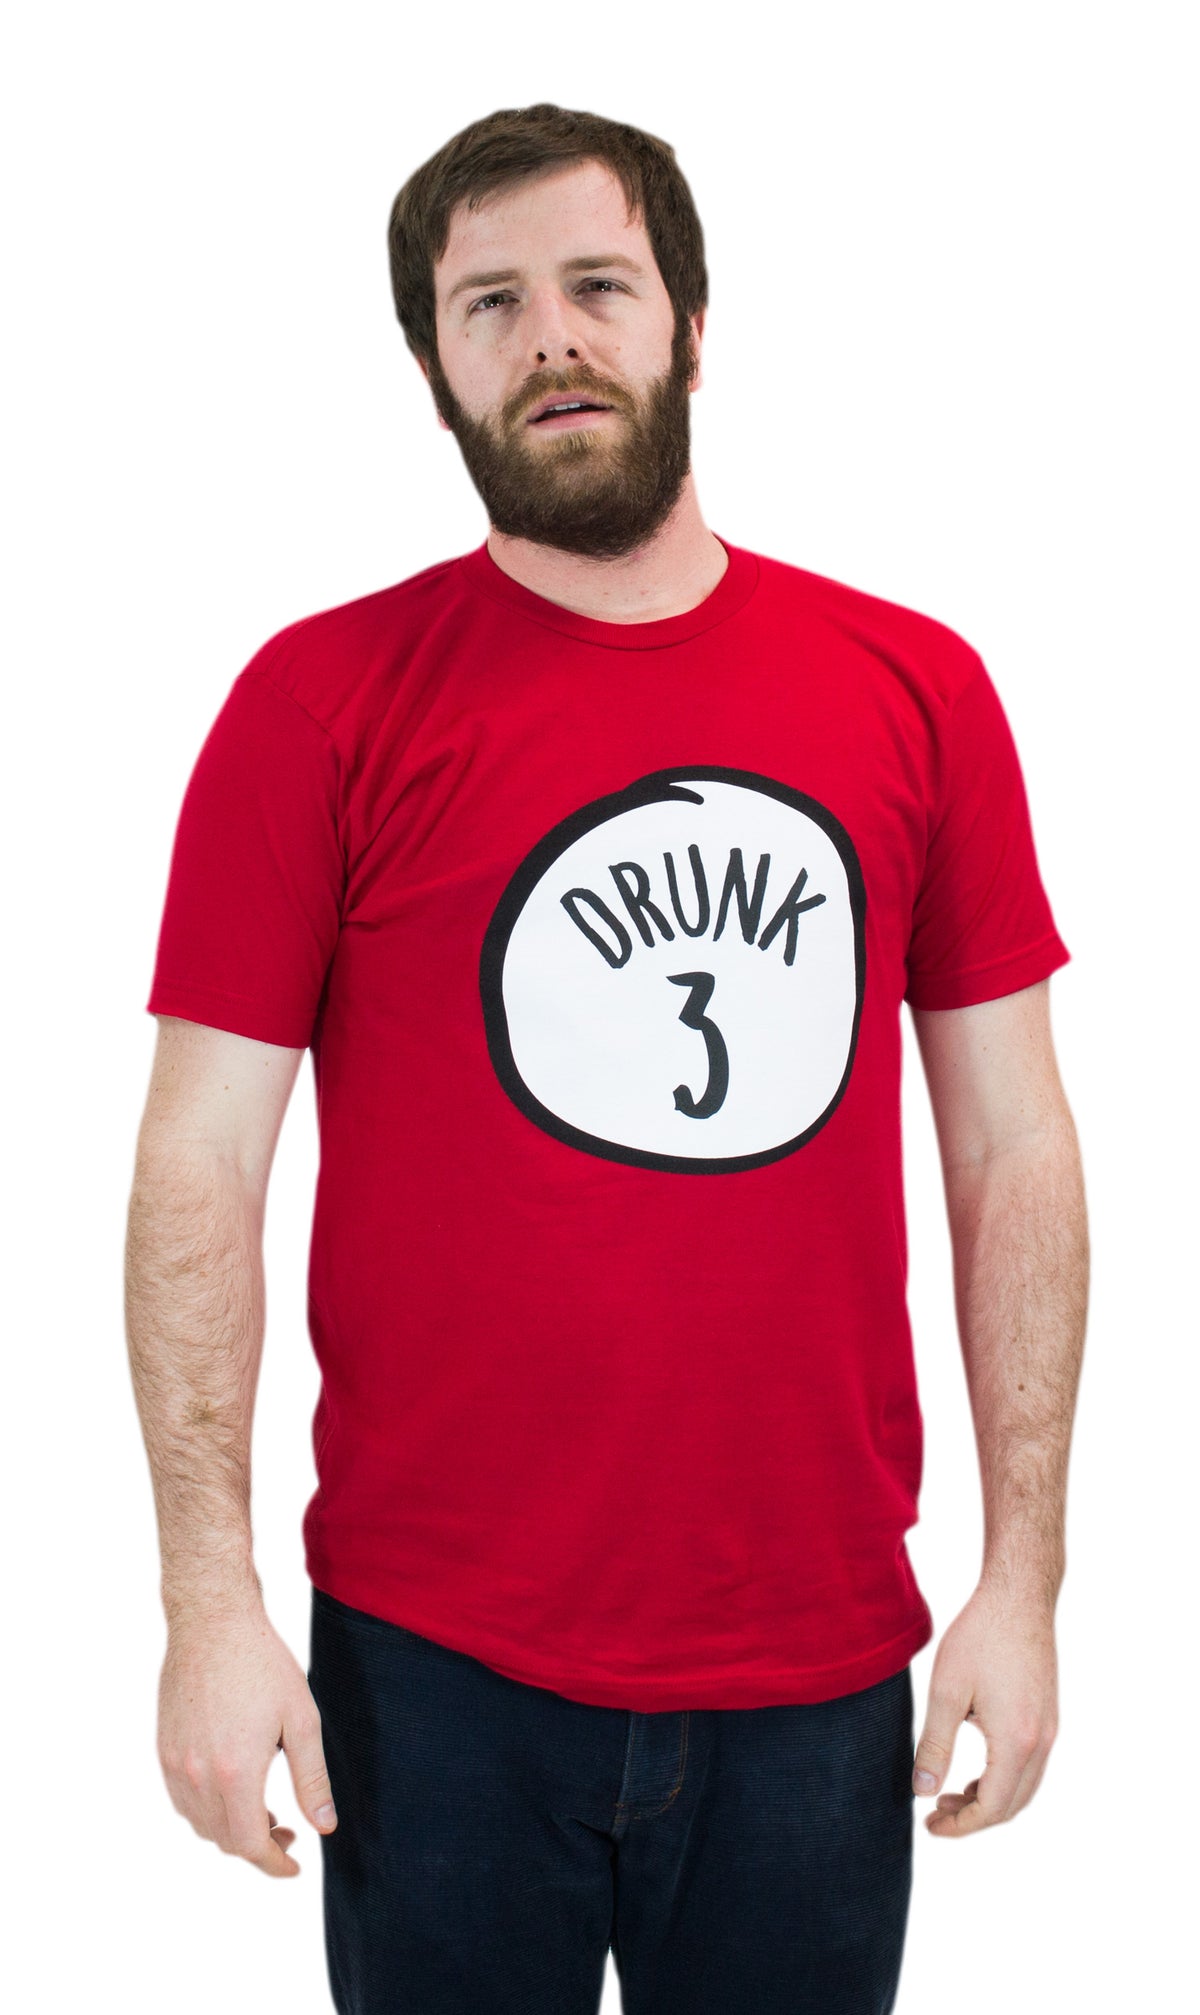 Drunk 3 | Funny Drinking Team, Group Halloween Costume Unisex T-shirt